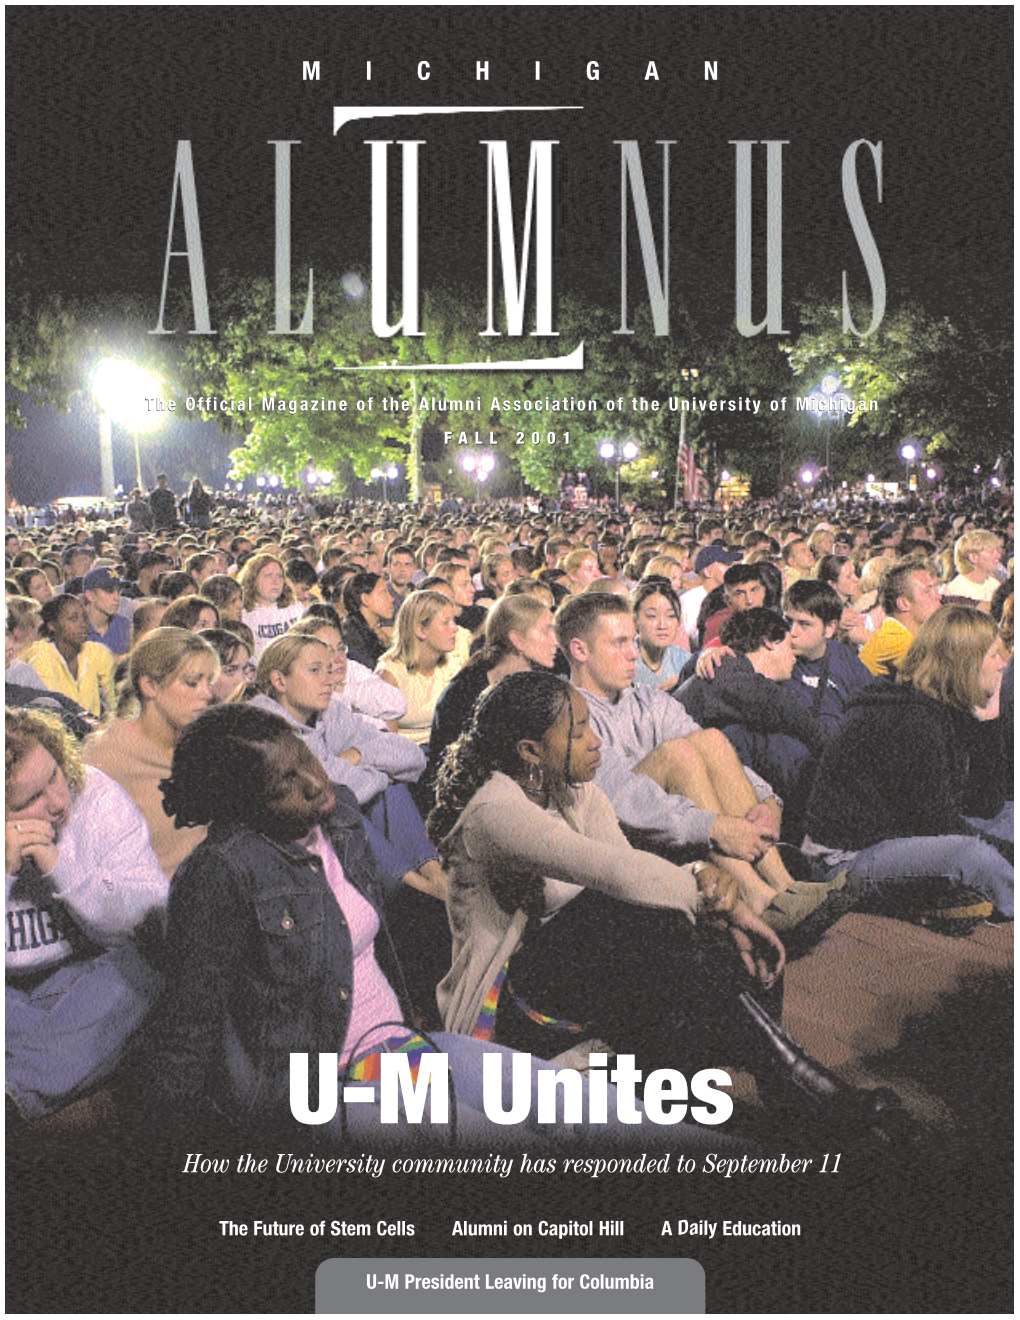 U-M Unites How the University Community Has Responded to September 11